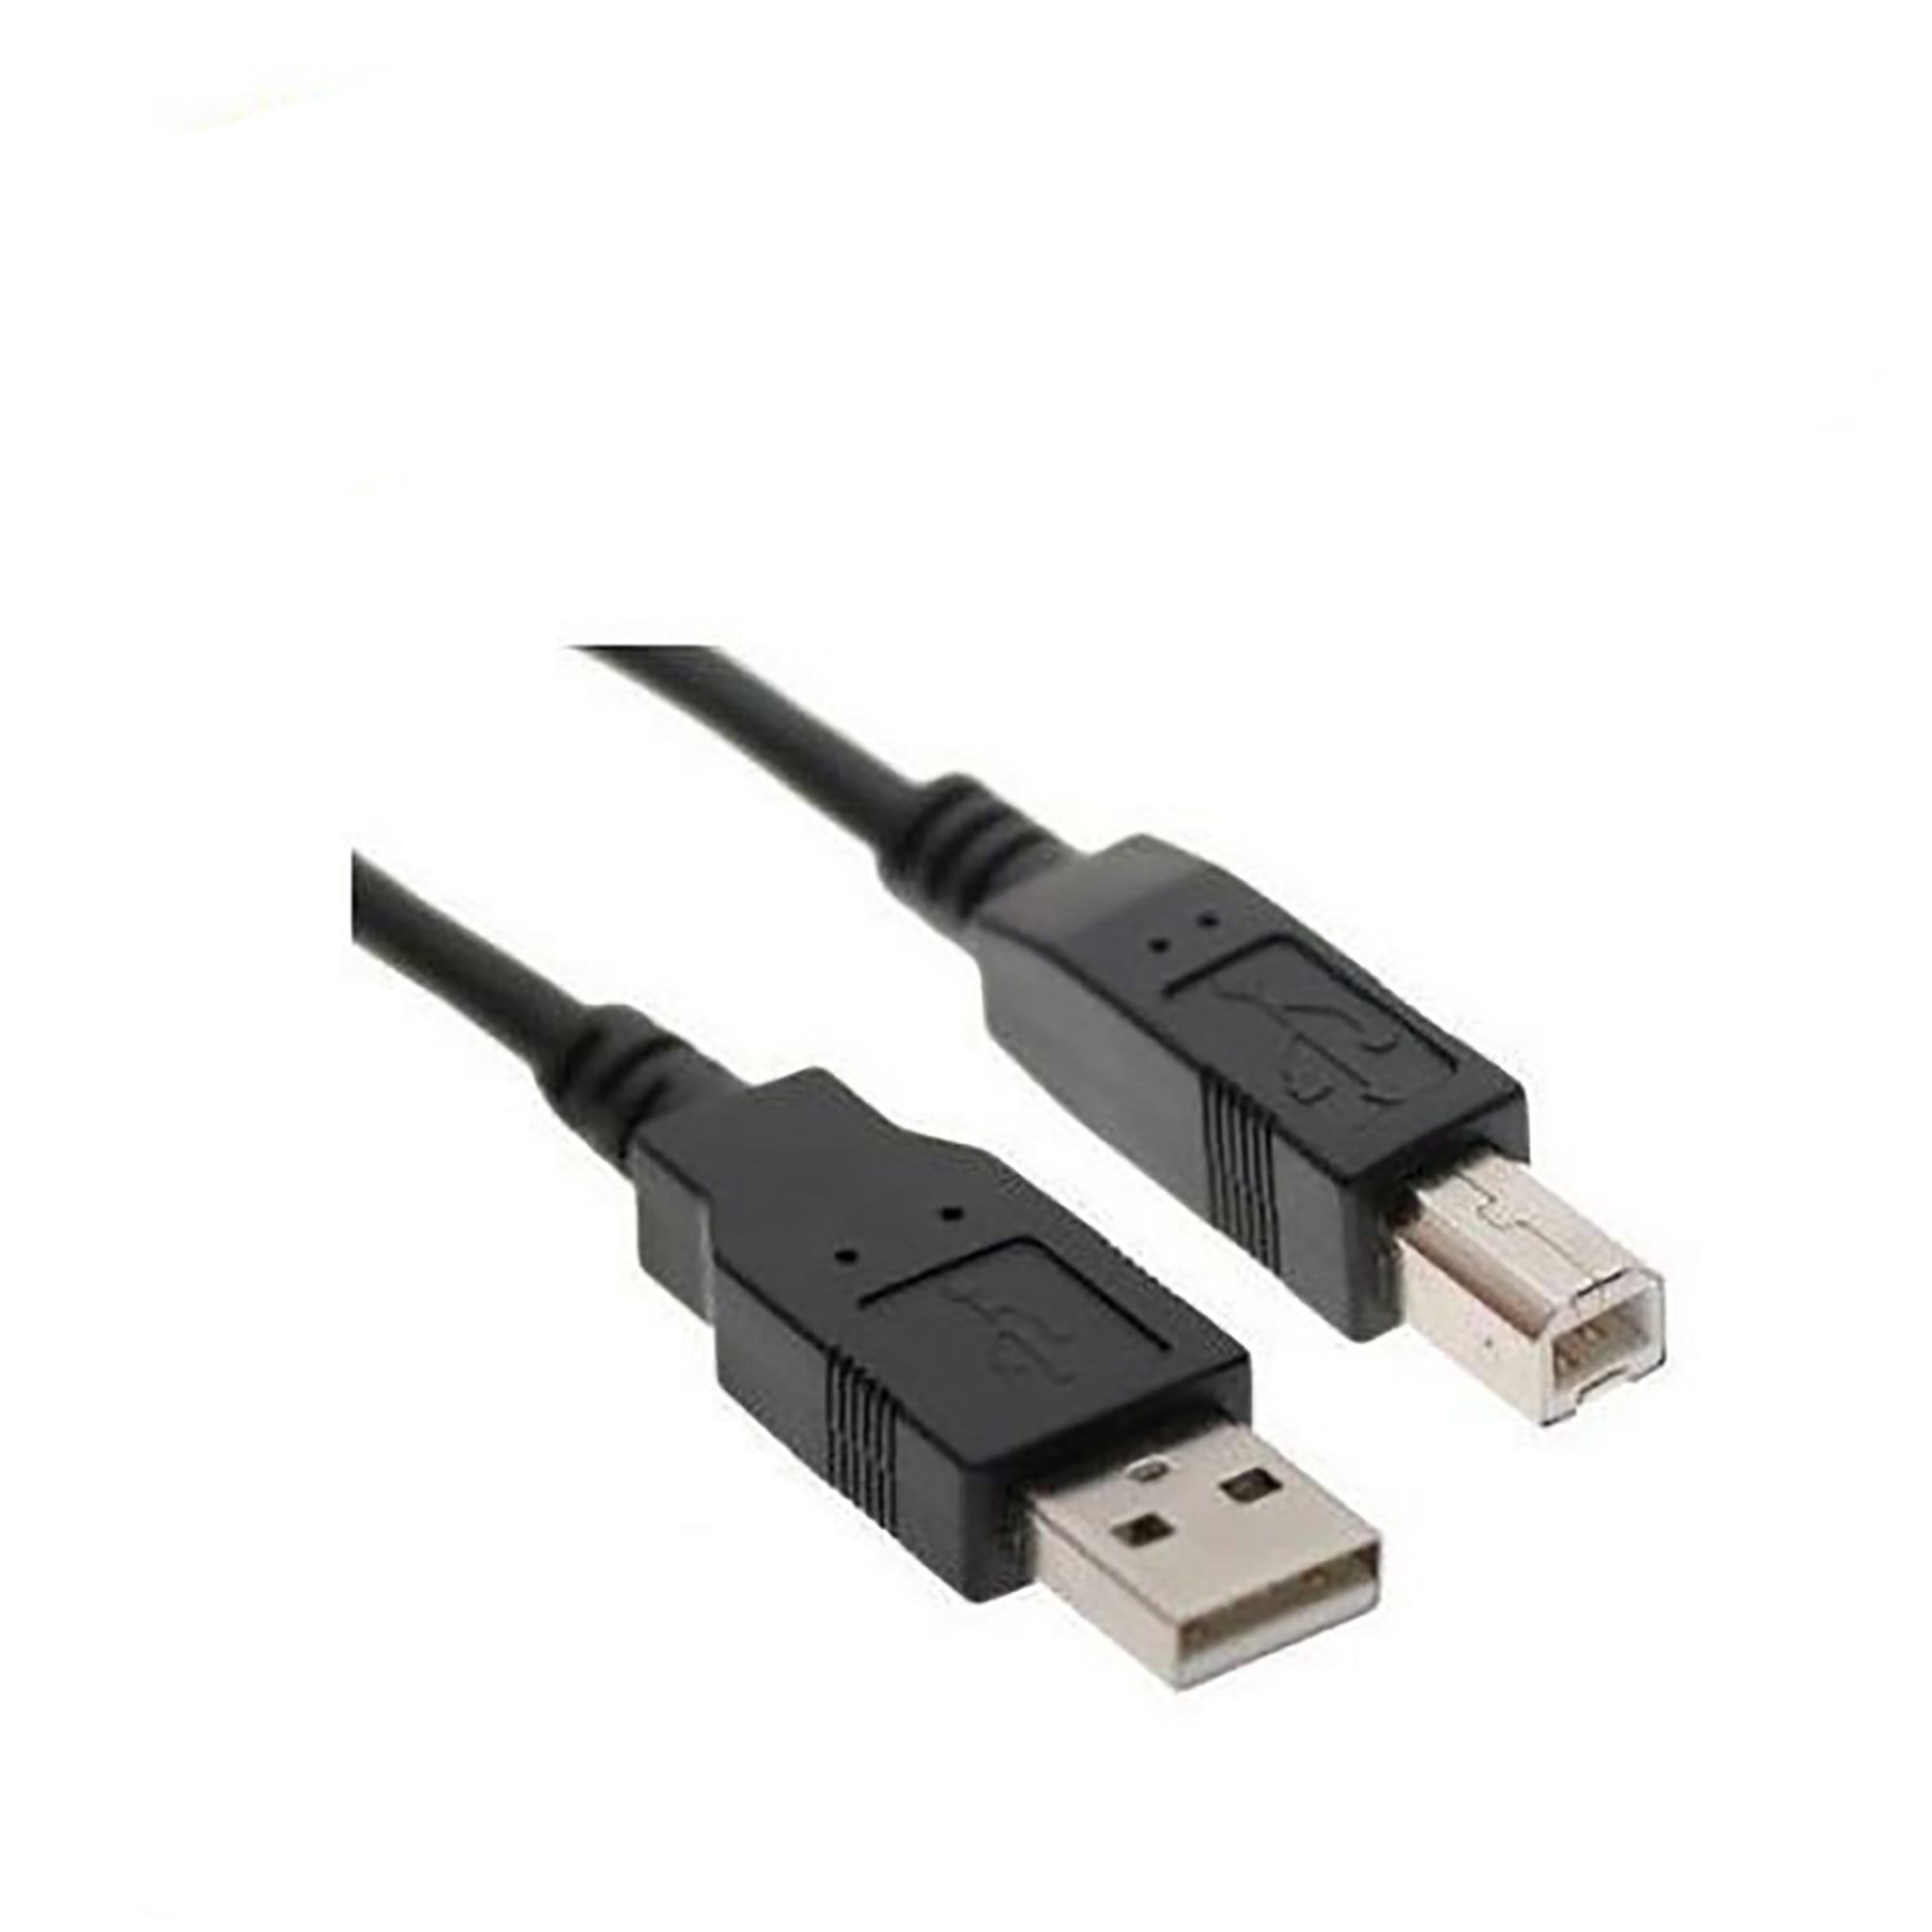 NEW Hi-Speed USB Printer Lead Cable Cord For Epson WorkForce Range Printer 